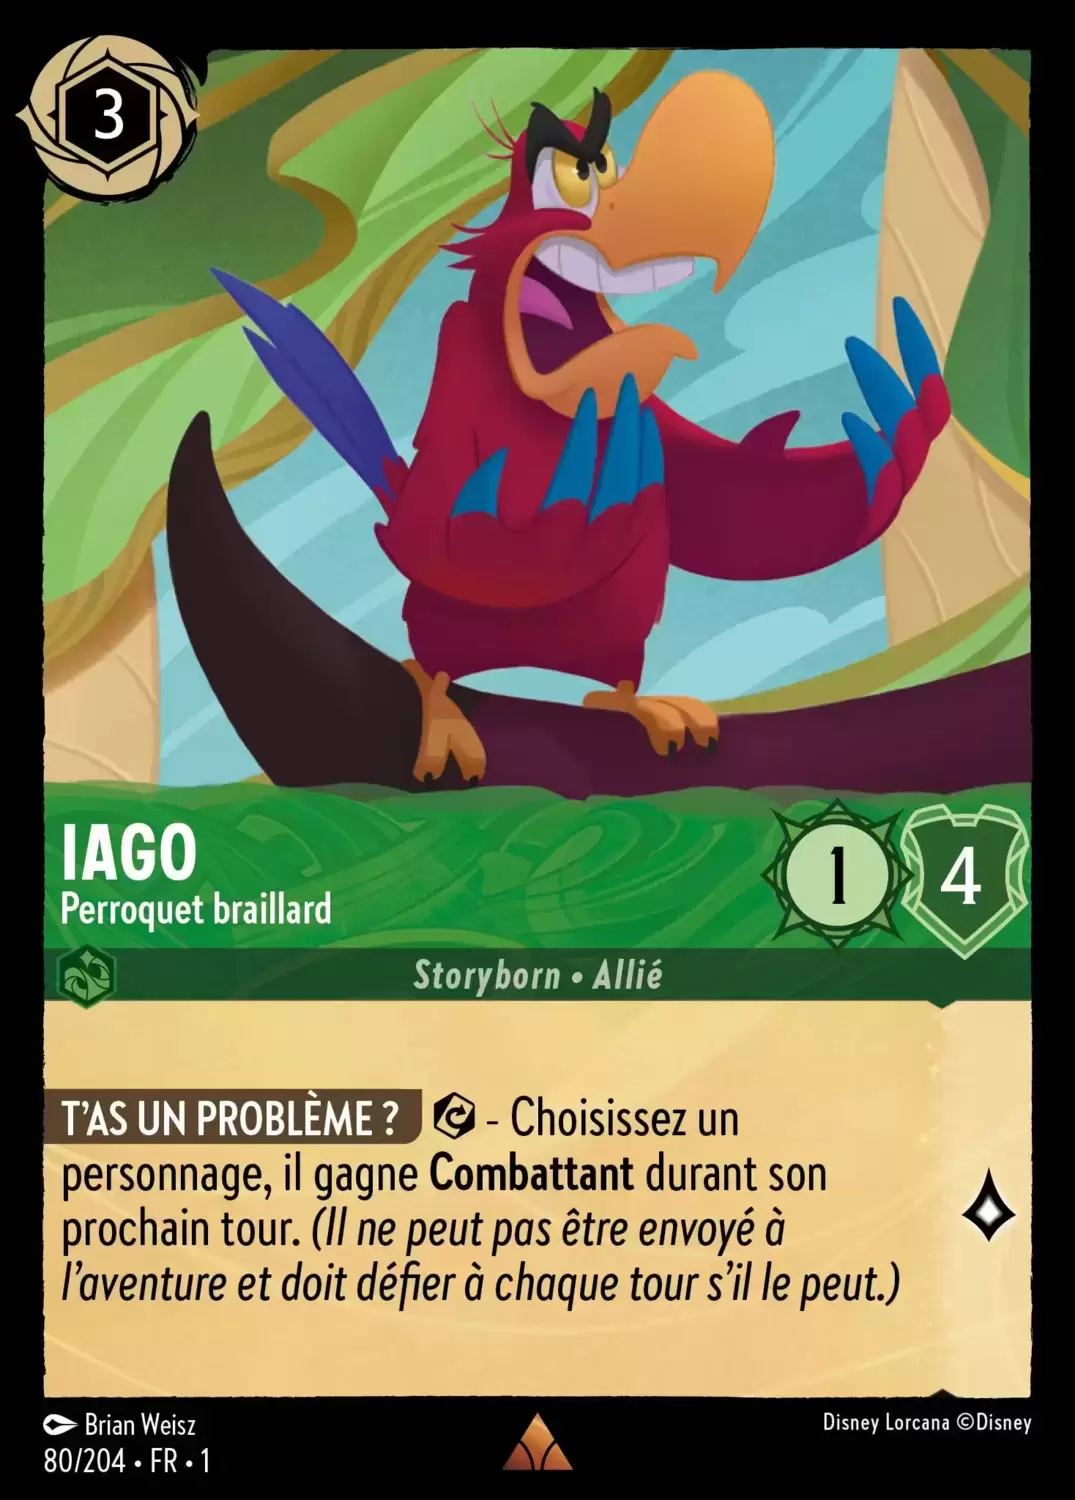 Premier chapitre - Iago - Perroquet braillard